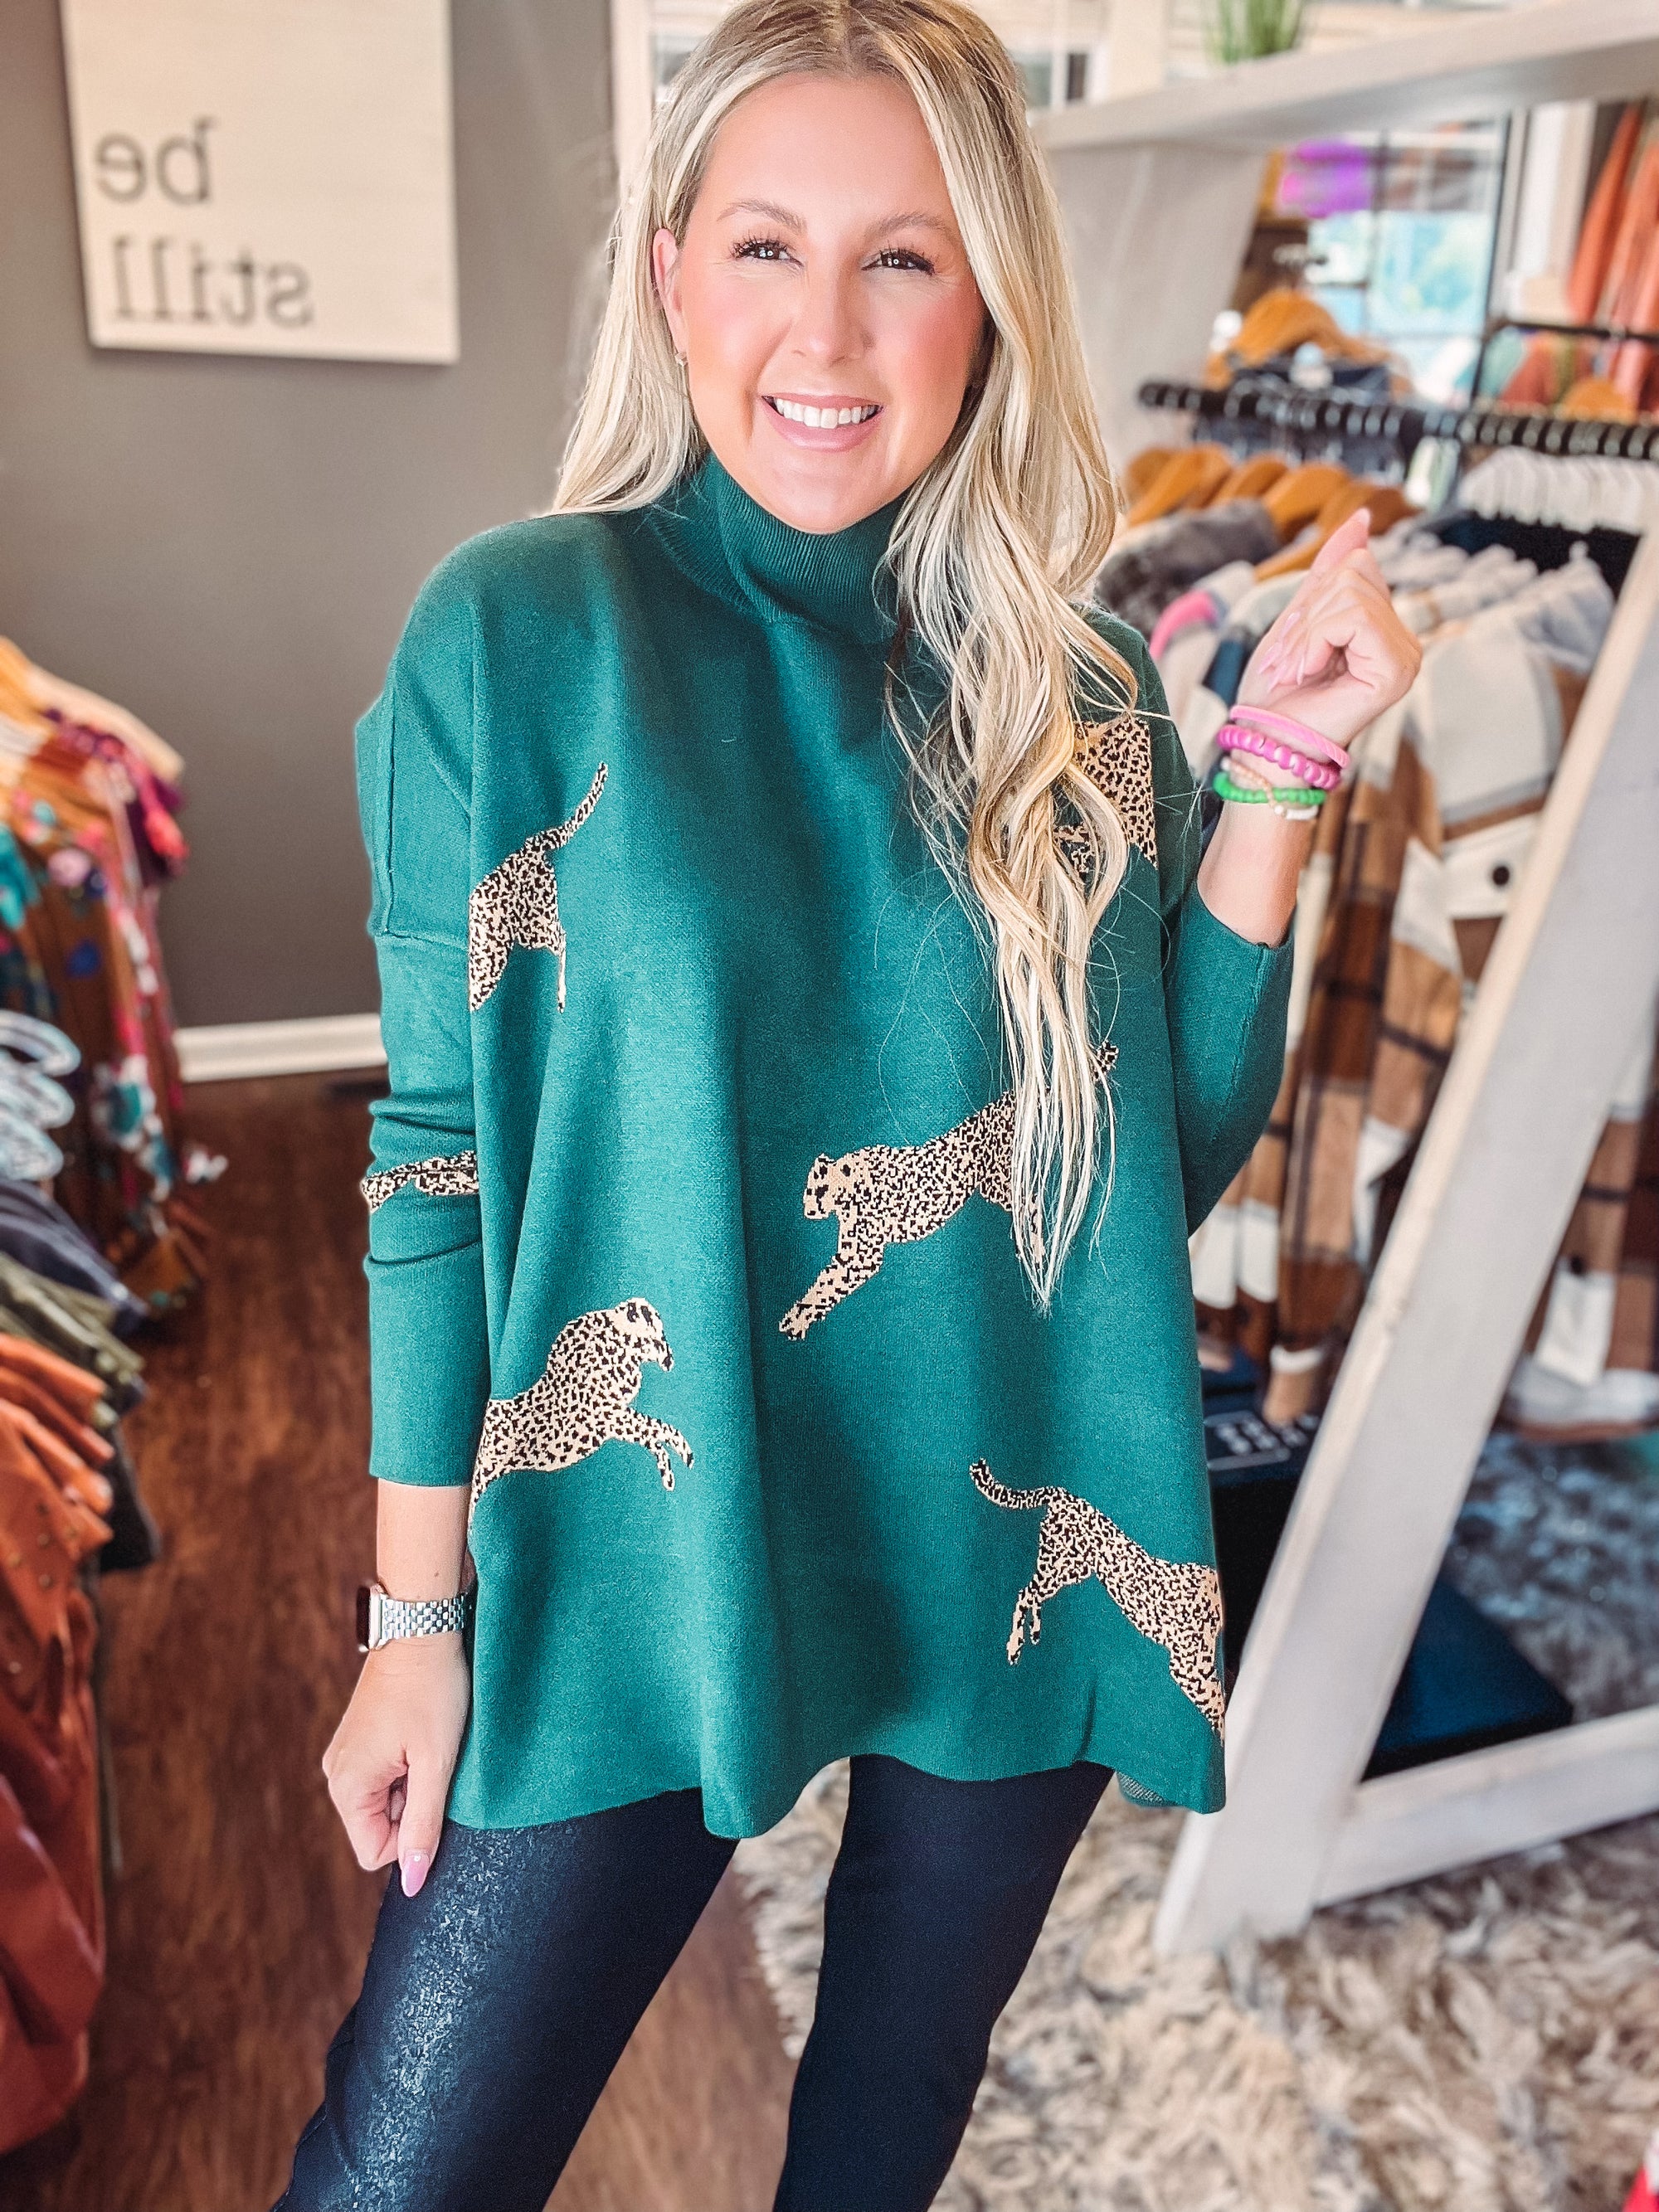 Next Level Hunter Green Cheetah Print Sweater